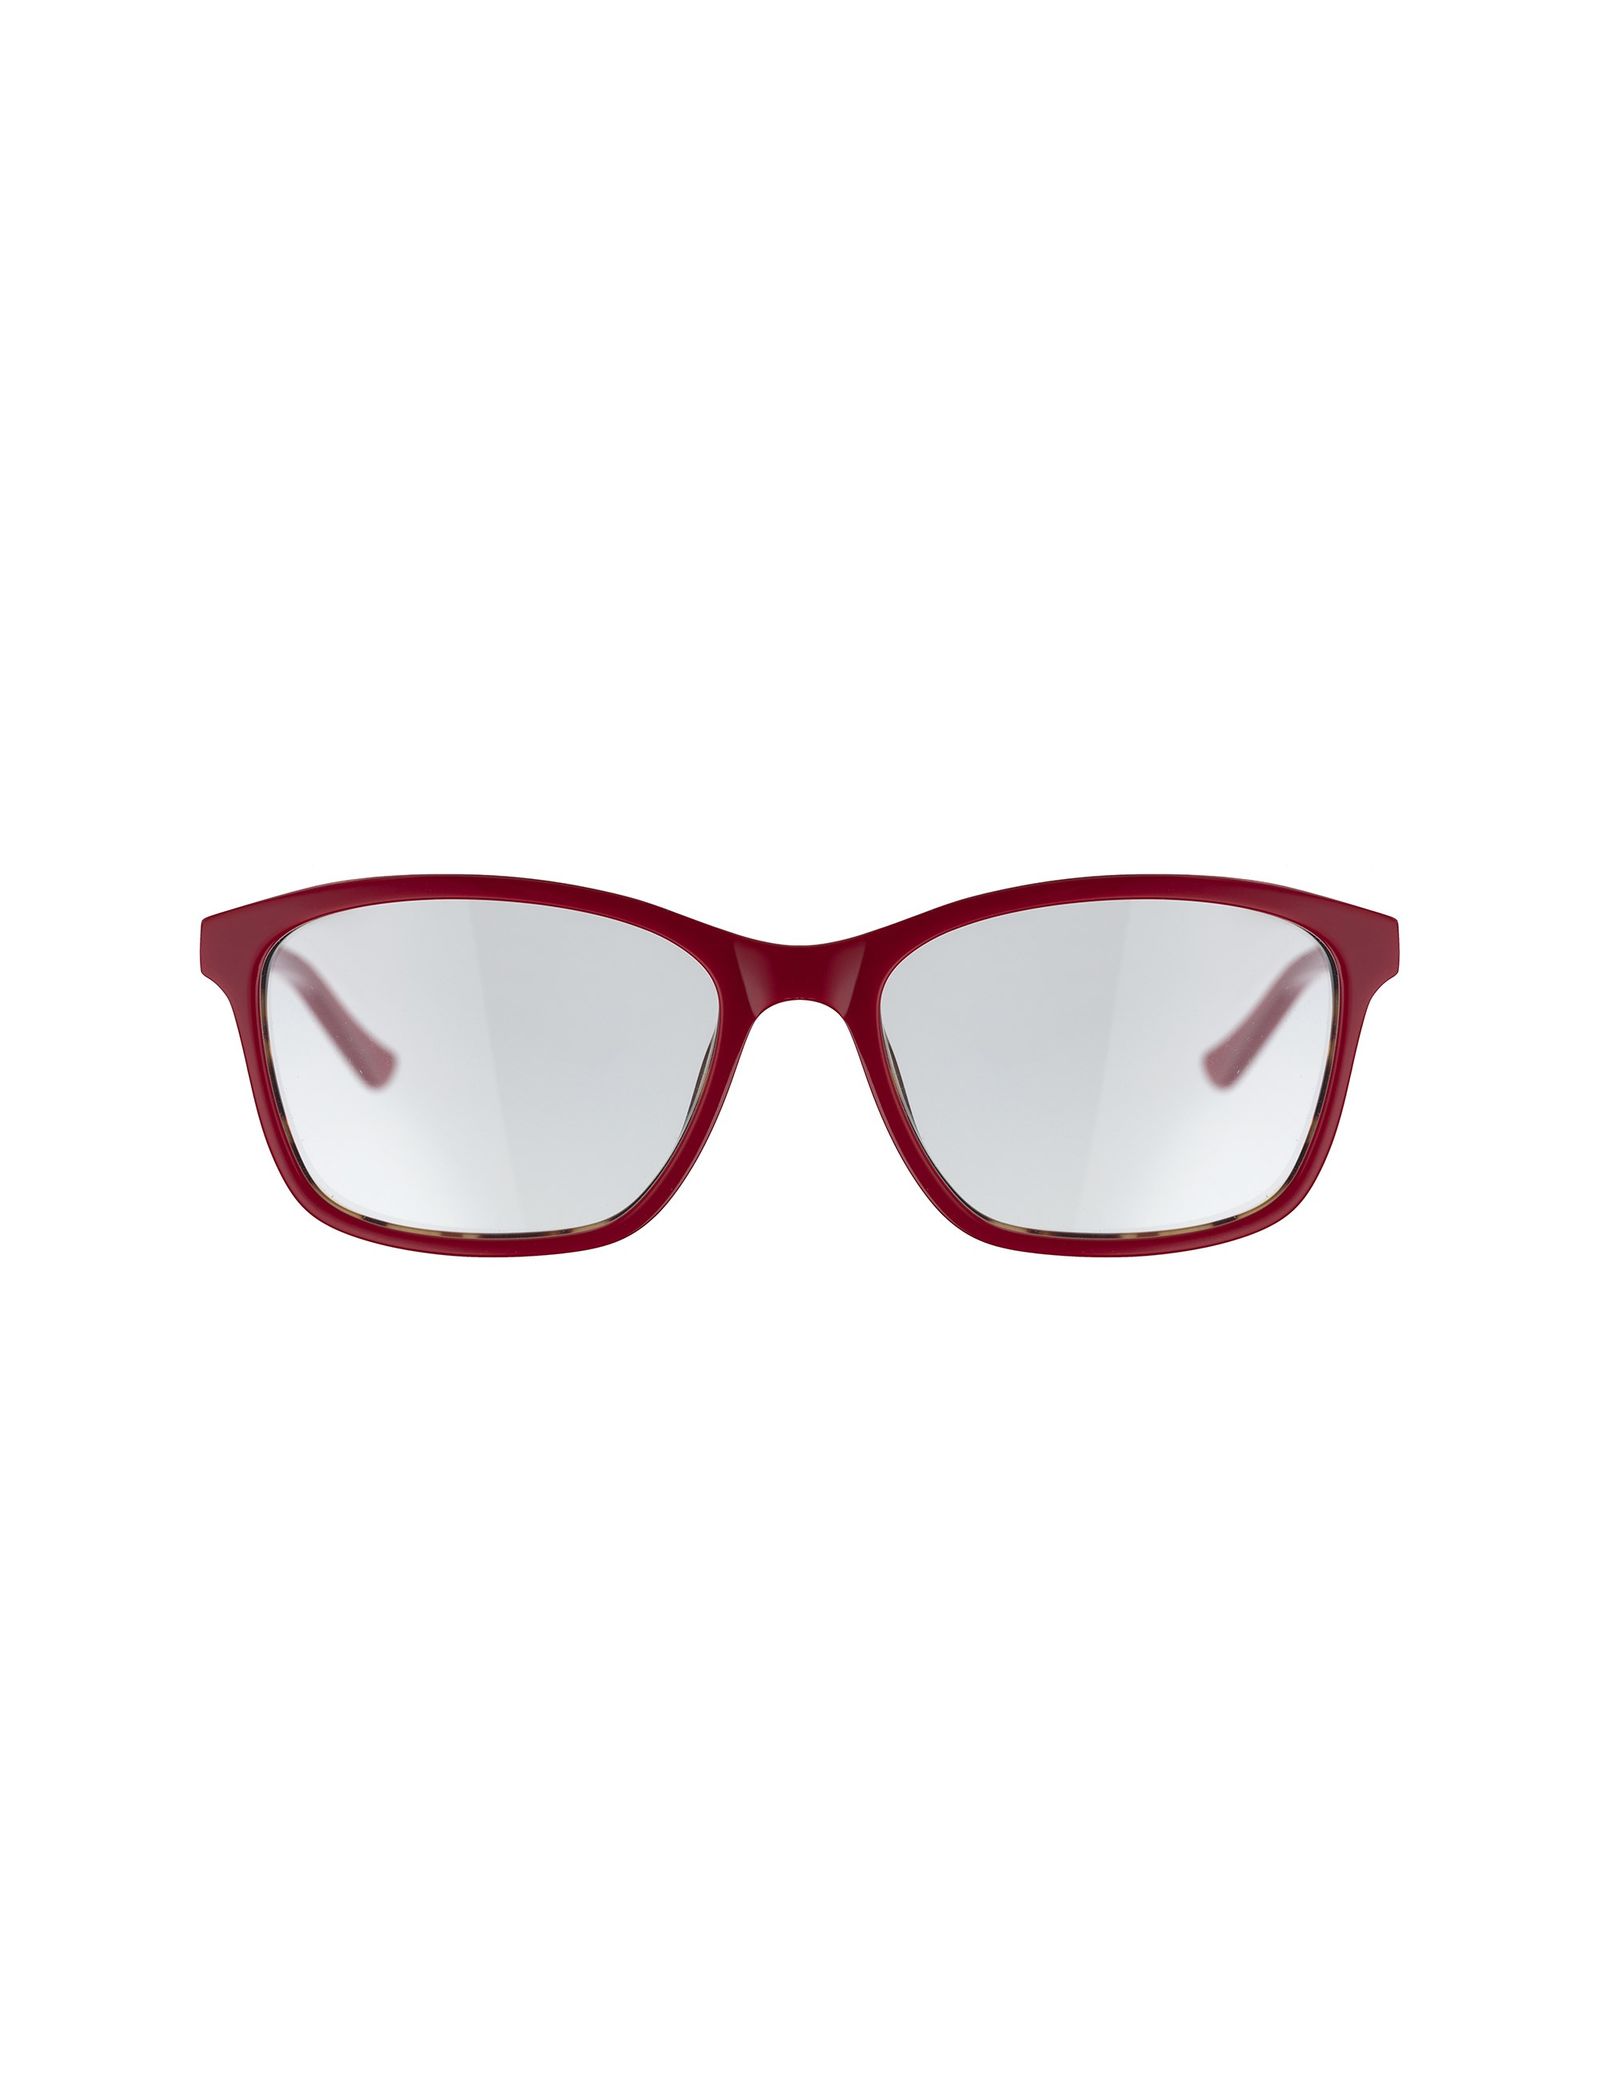 عینک طبی ویفرر زنانه - پپه جینز - قرمز - 1